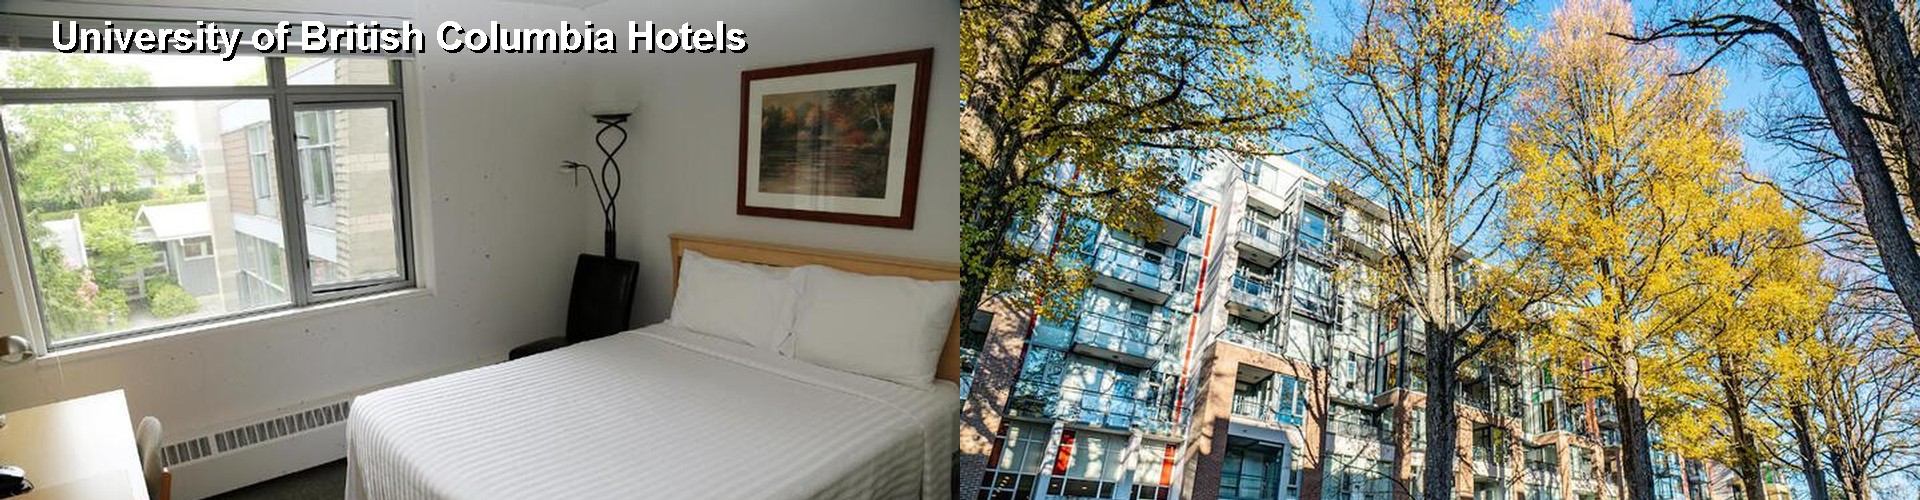 5 Best Hotels near University of British Columbia